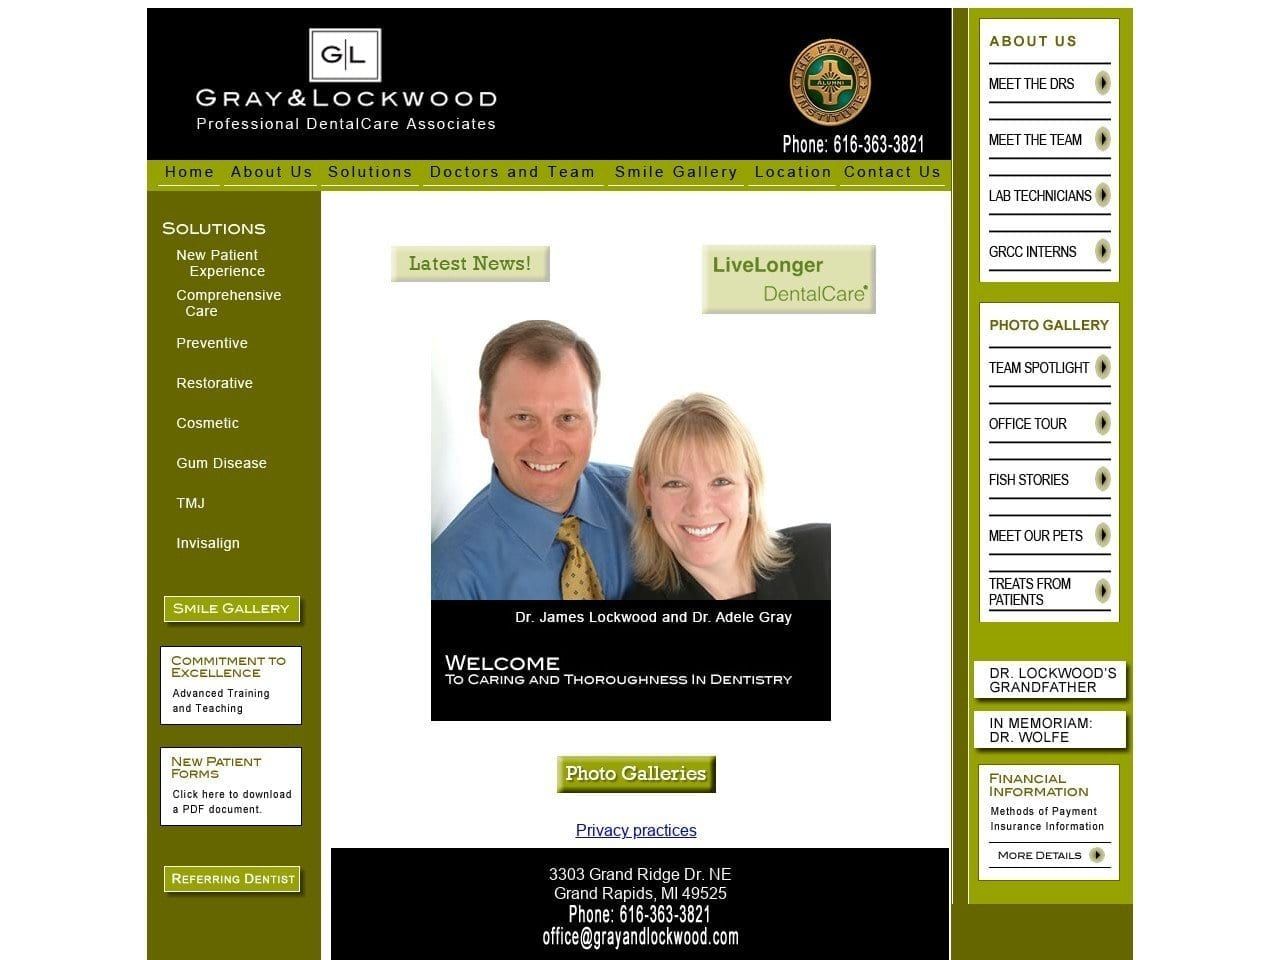 Professional Dental Care/Associates Website Screenshot from grayandlockwood.com